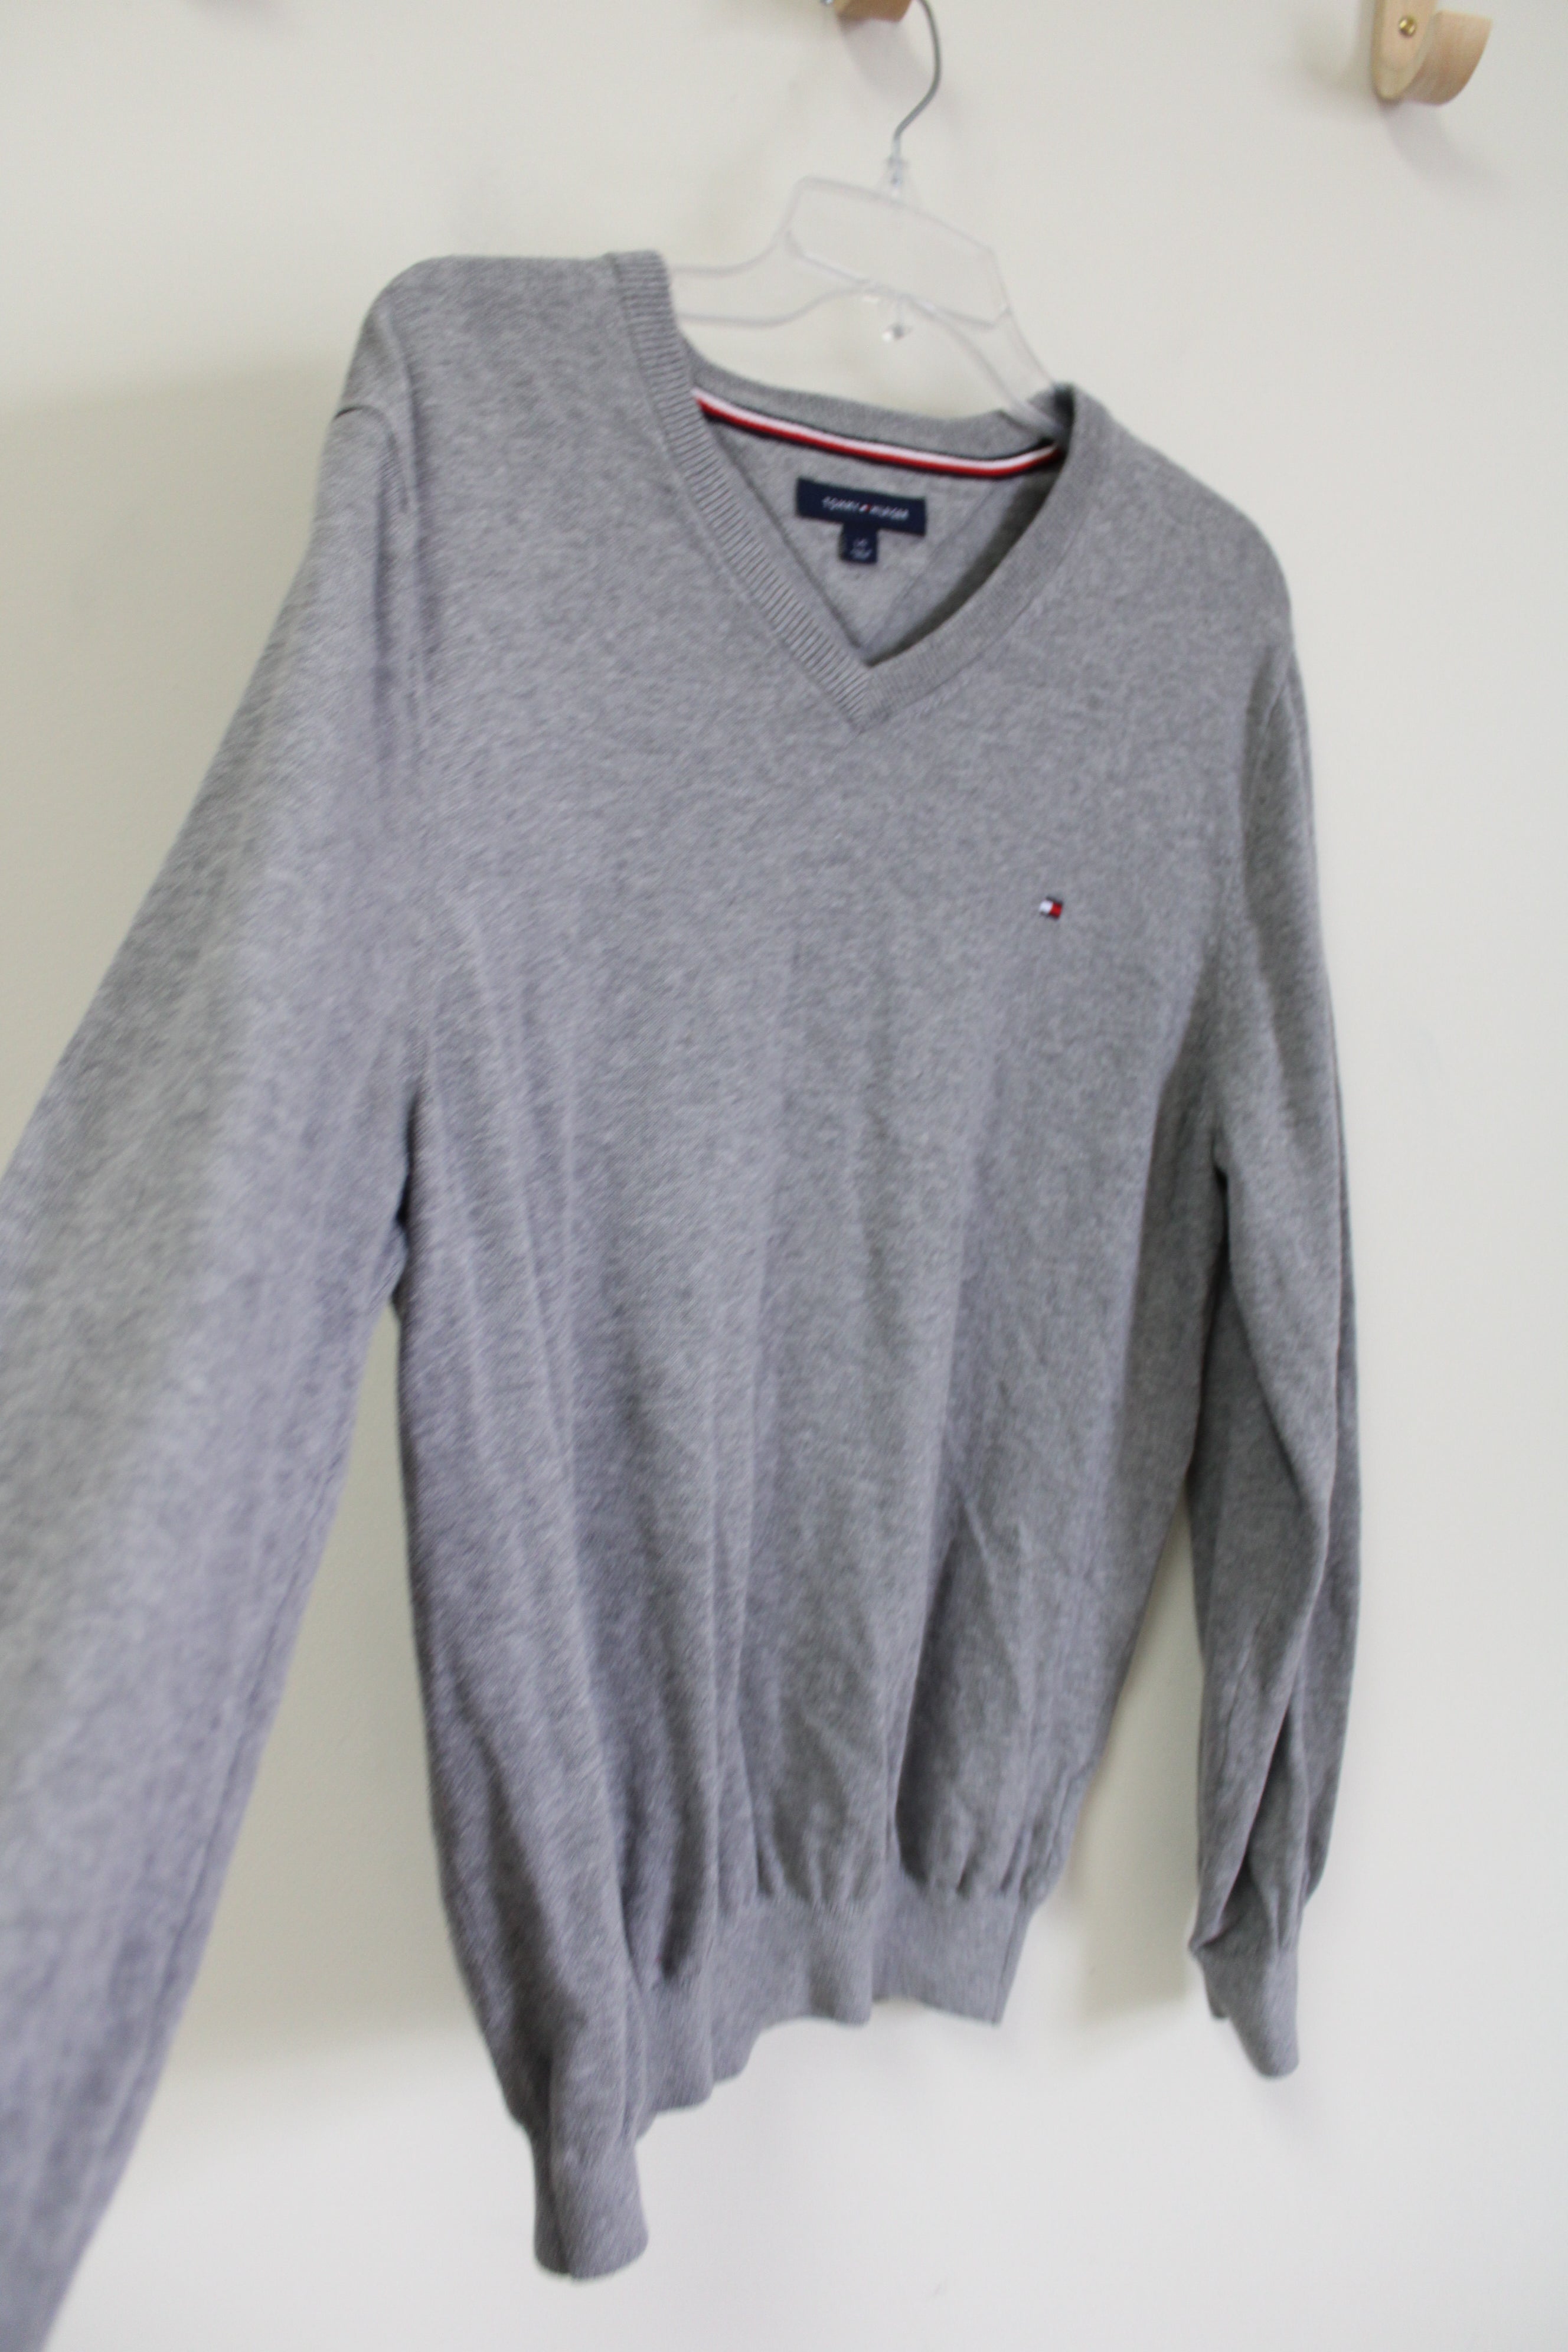 Tommy Hilfiger Gray Knit Sweater | L